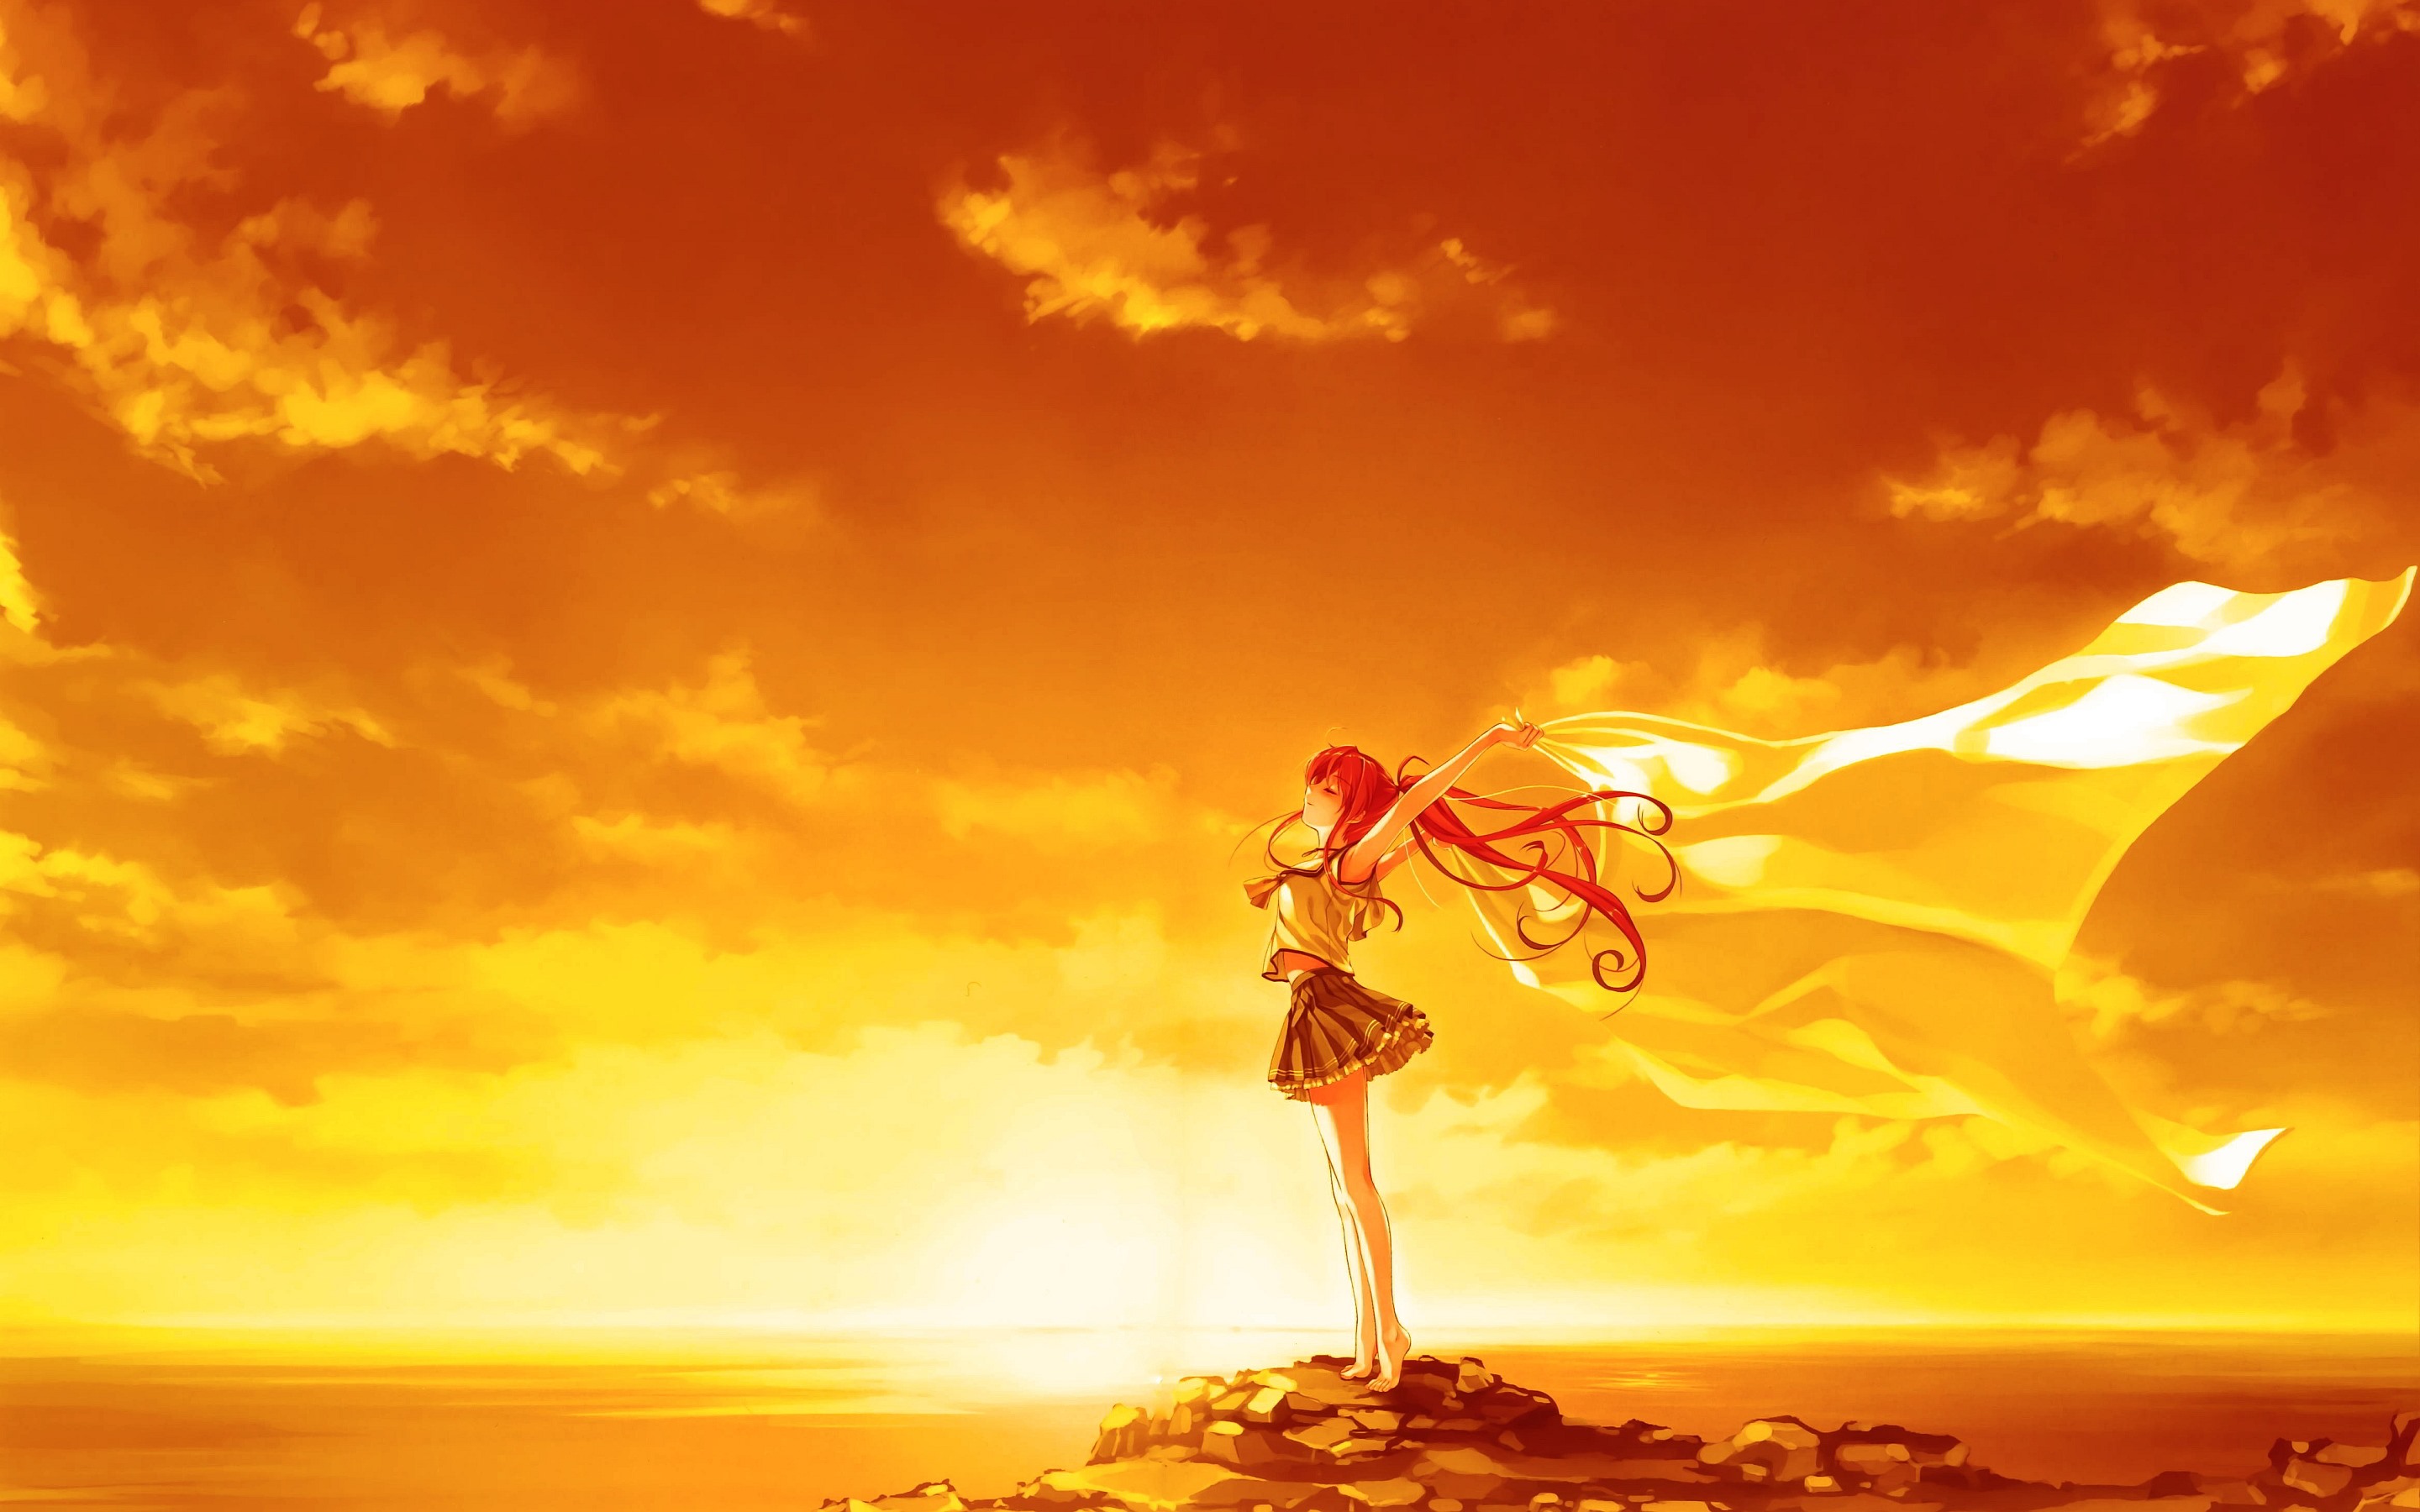 Anime Girl In Sunset Wallpapers